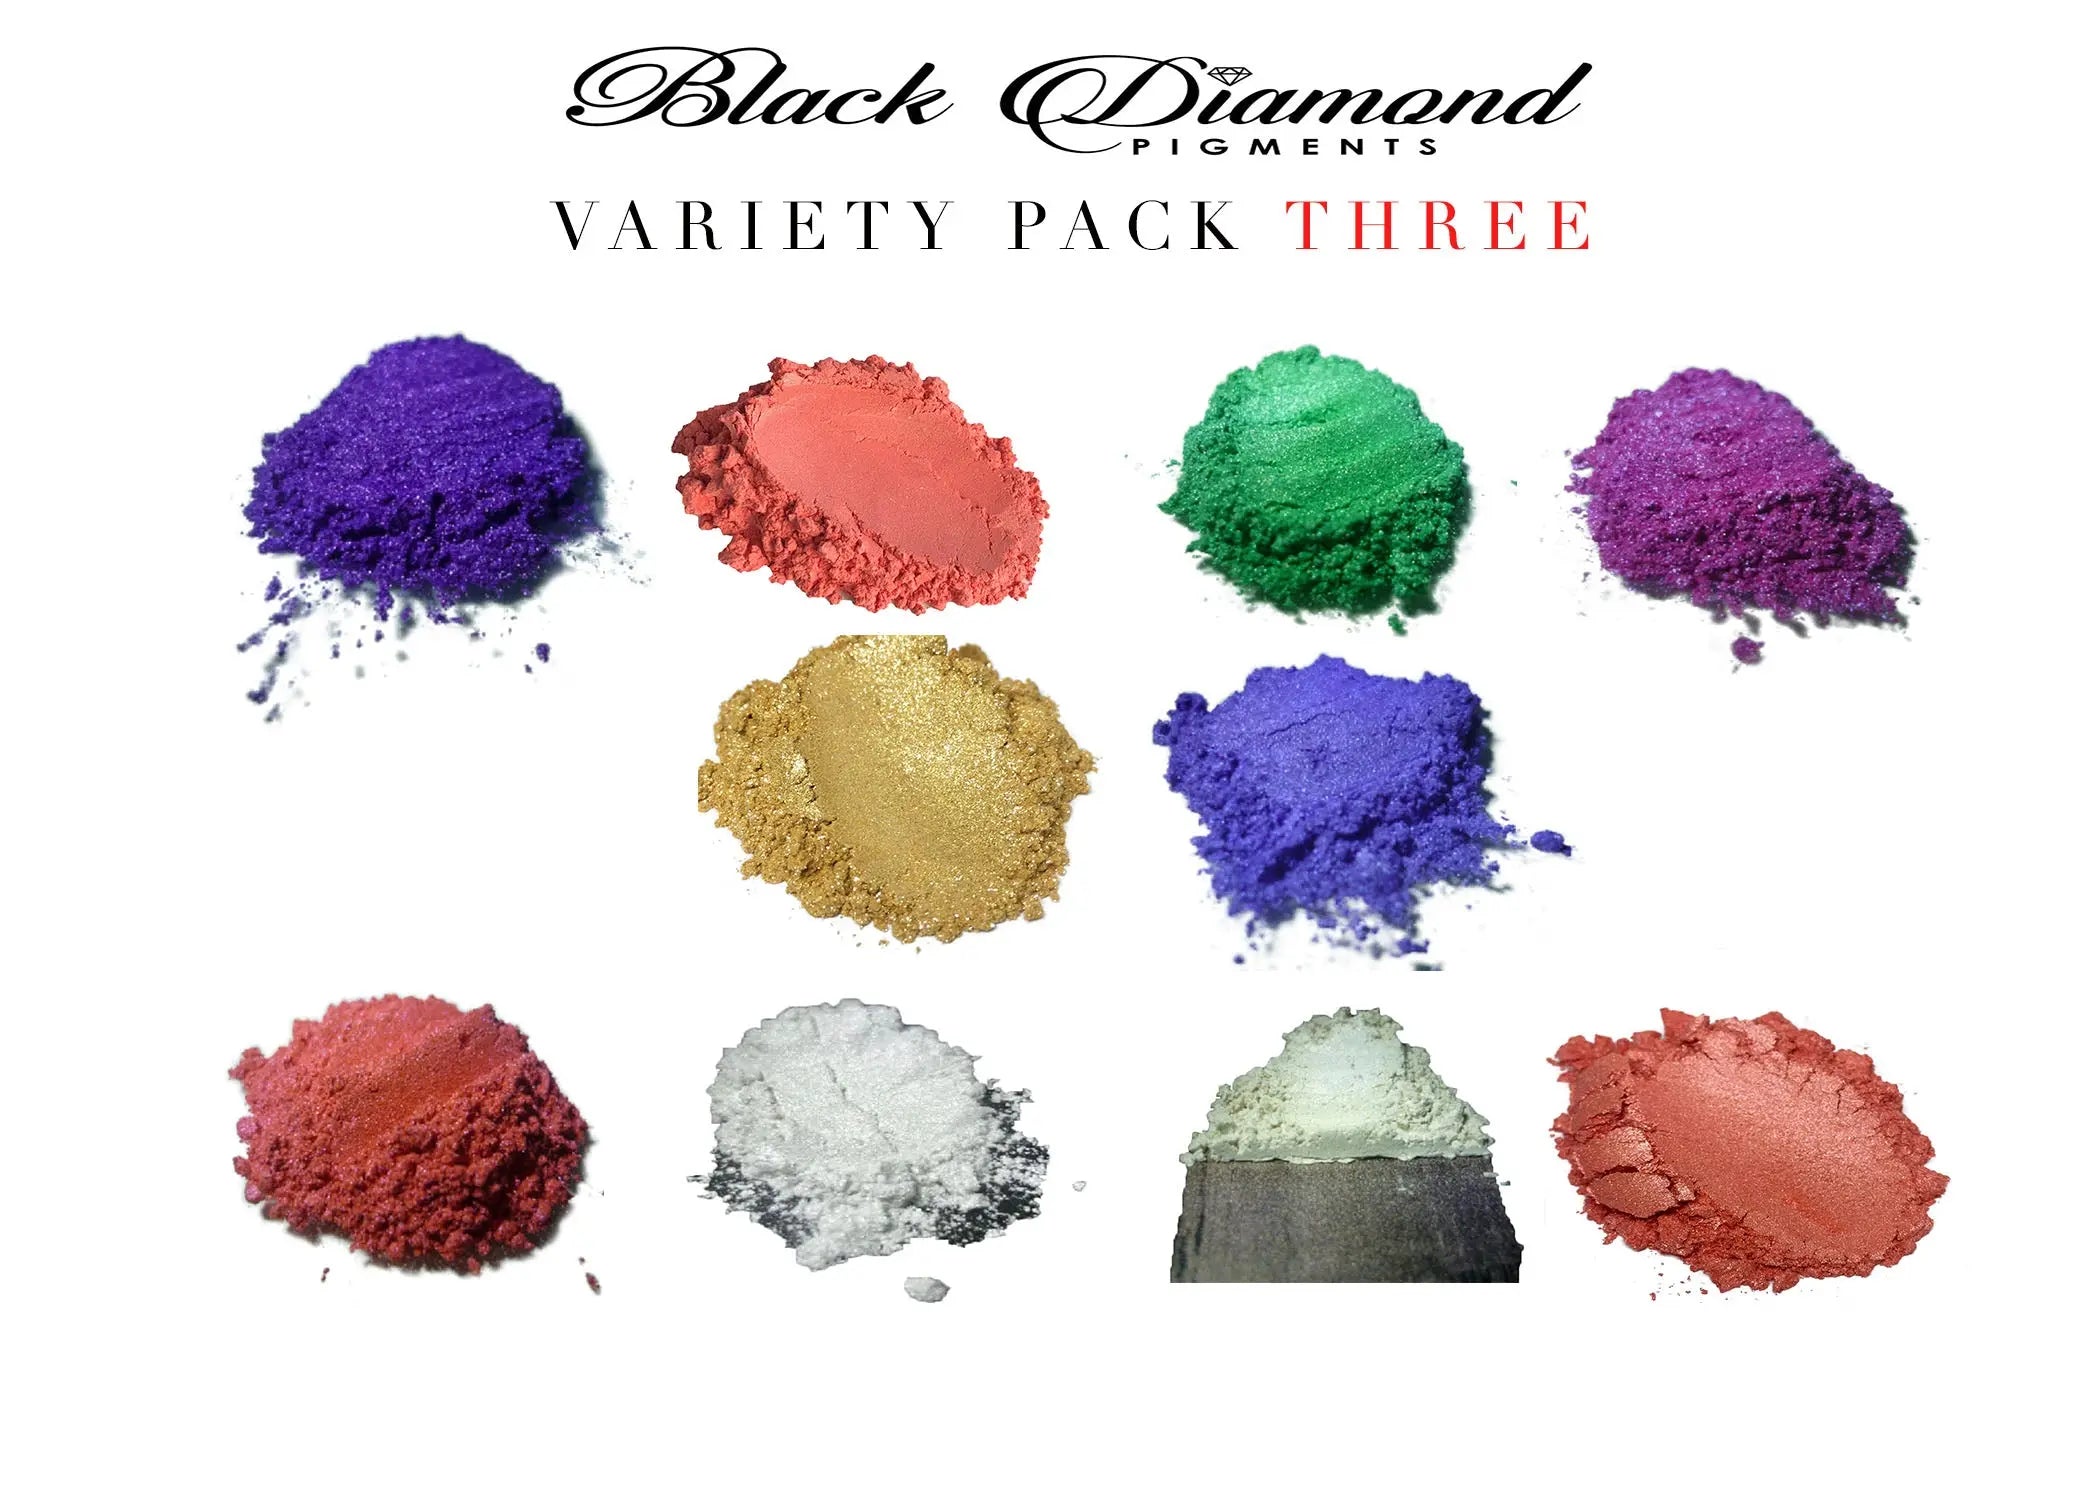 VARIETY PACK 3 (10 COLORS) mica powder pigment packs Black Diamond Pigments® - Black Diamond Pigments